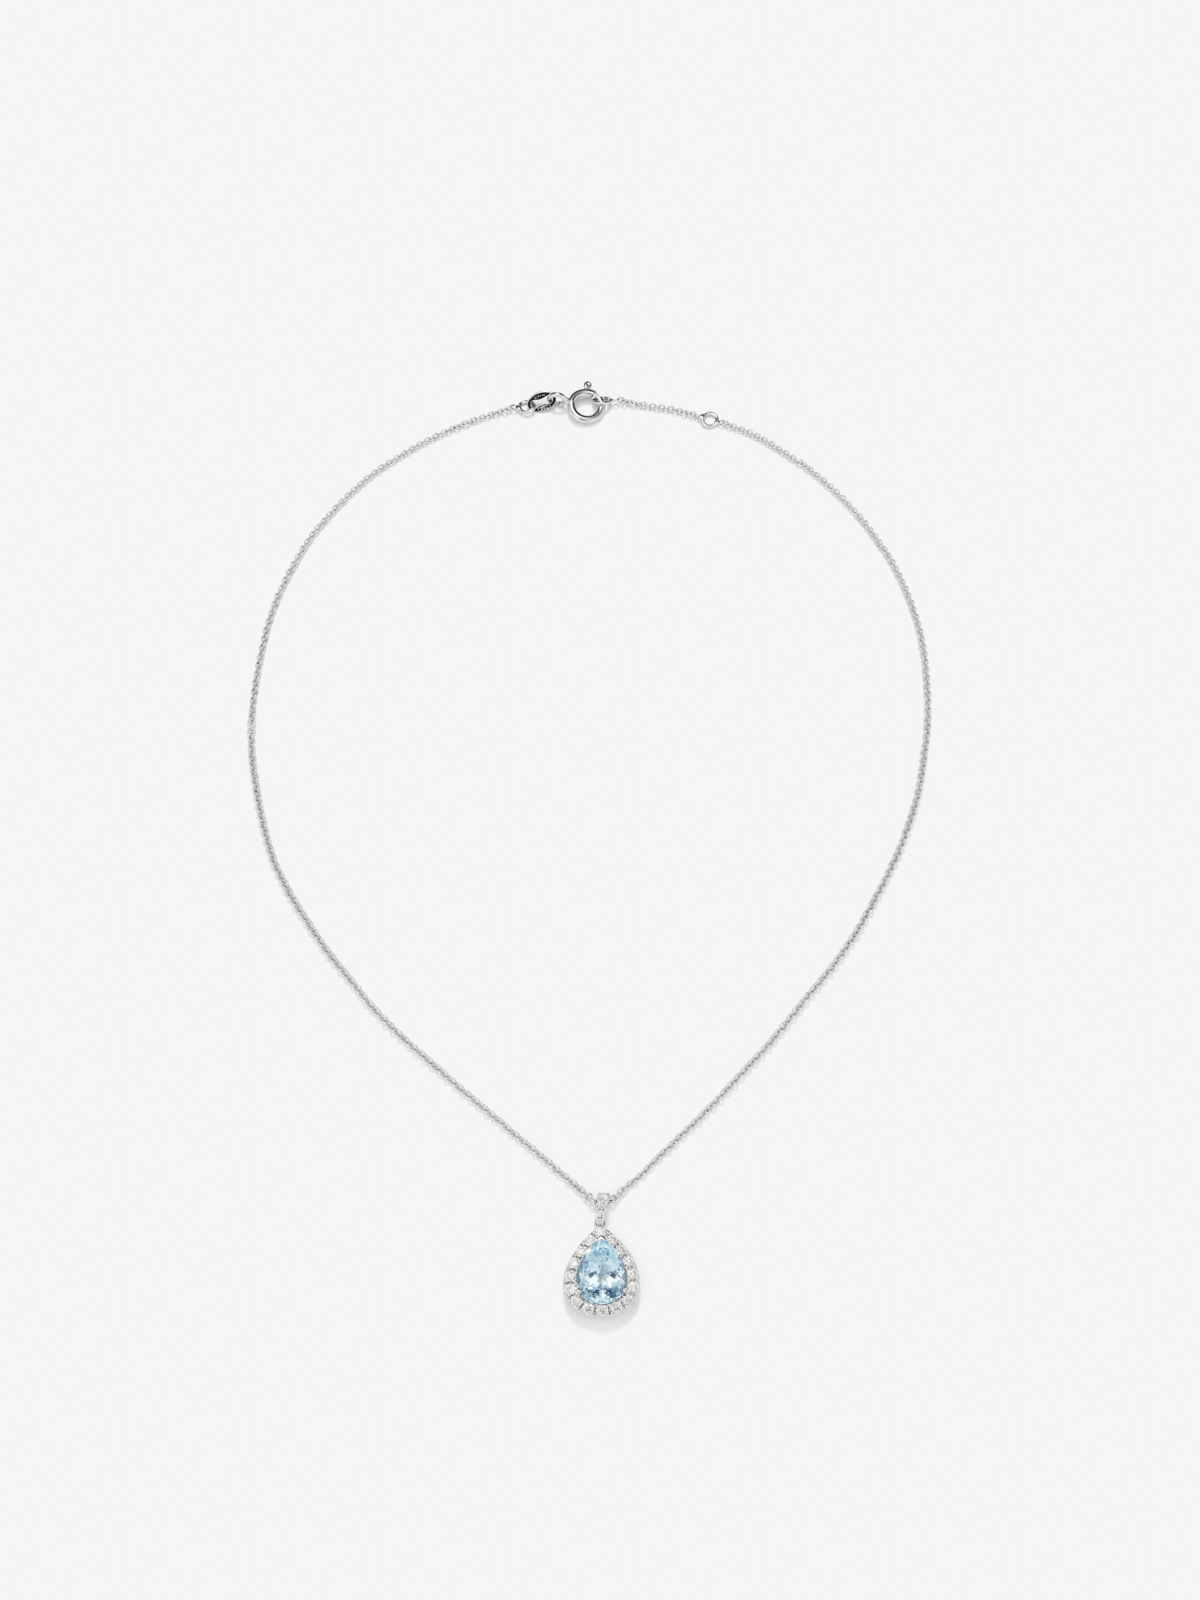 18K white gold pendant chain with aquamarine and diamond